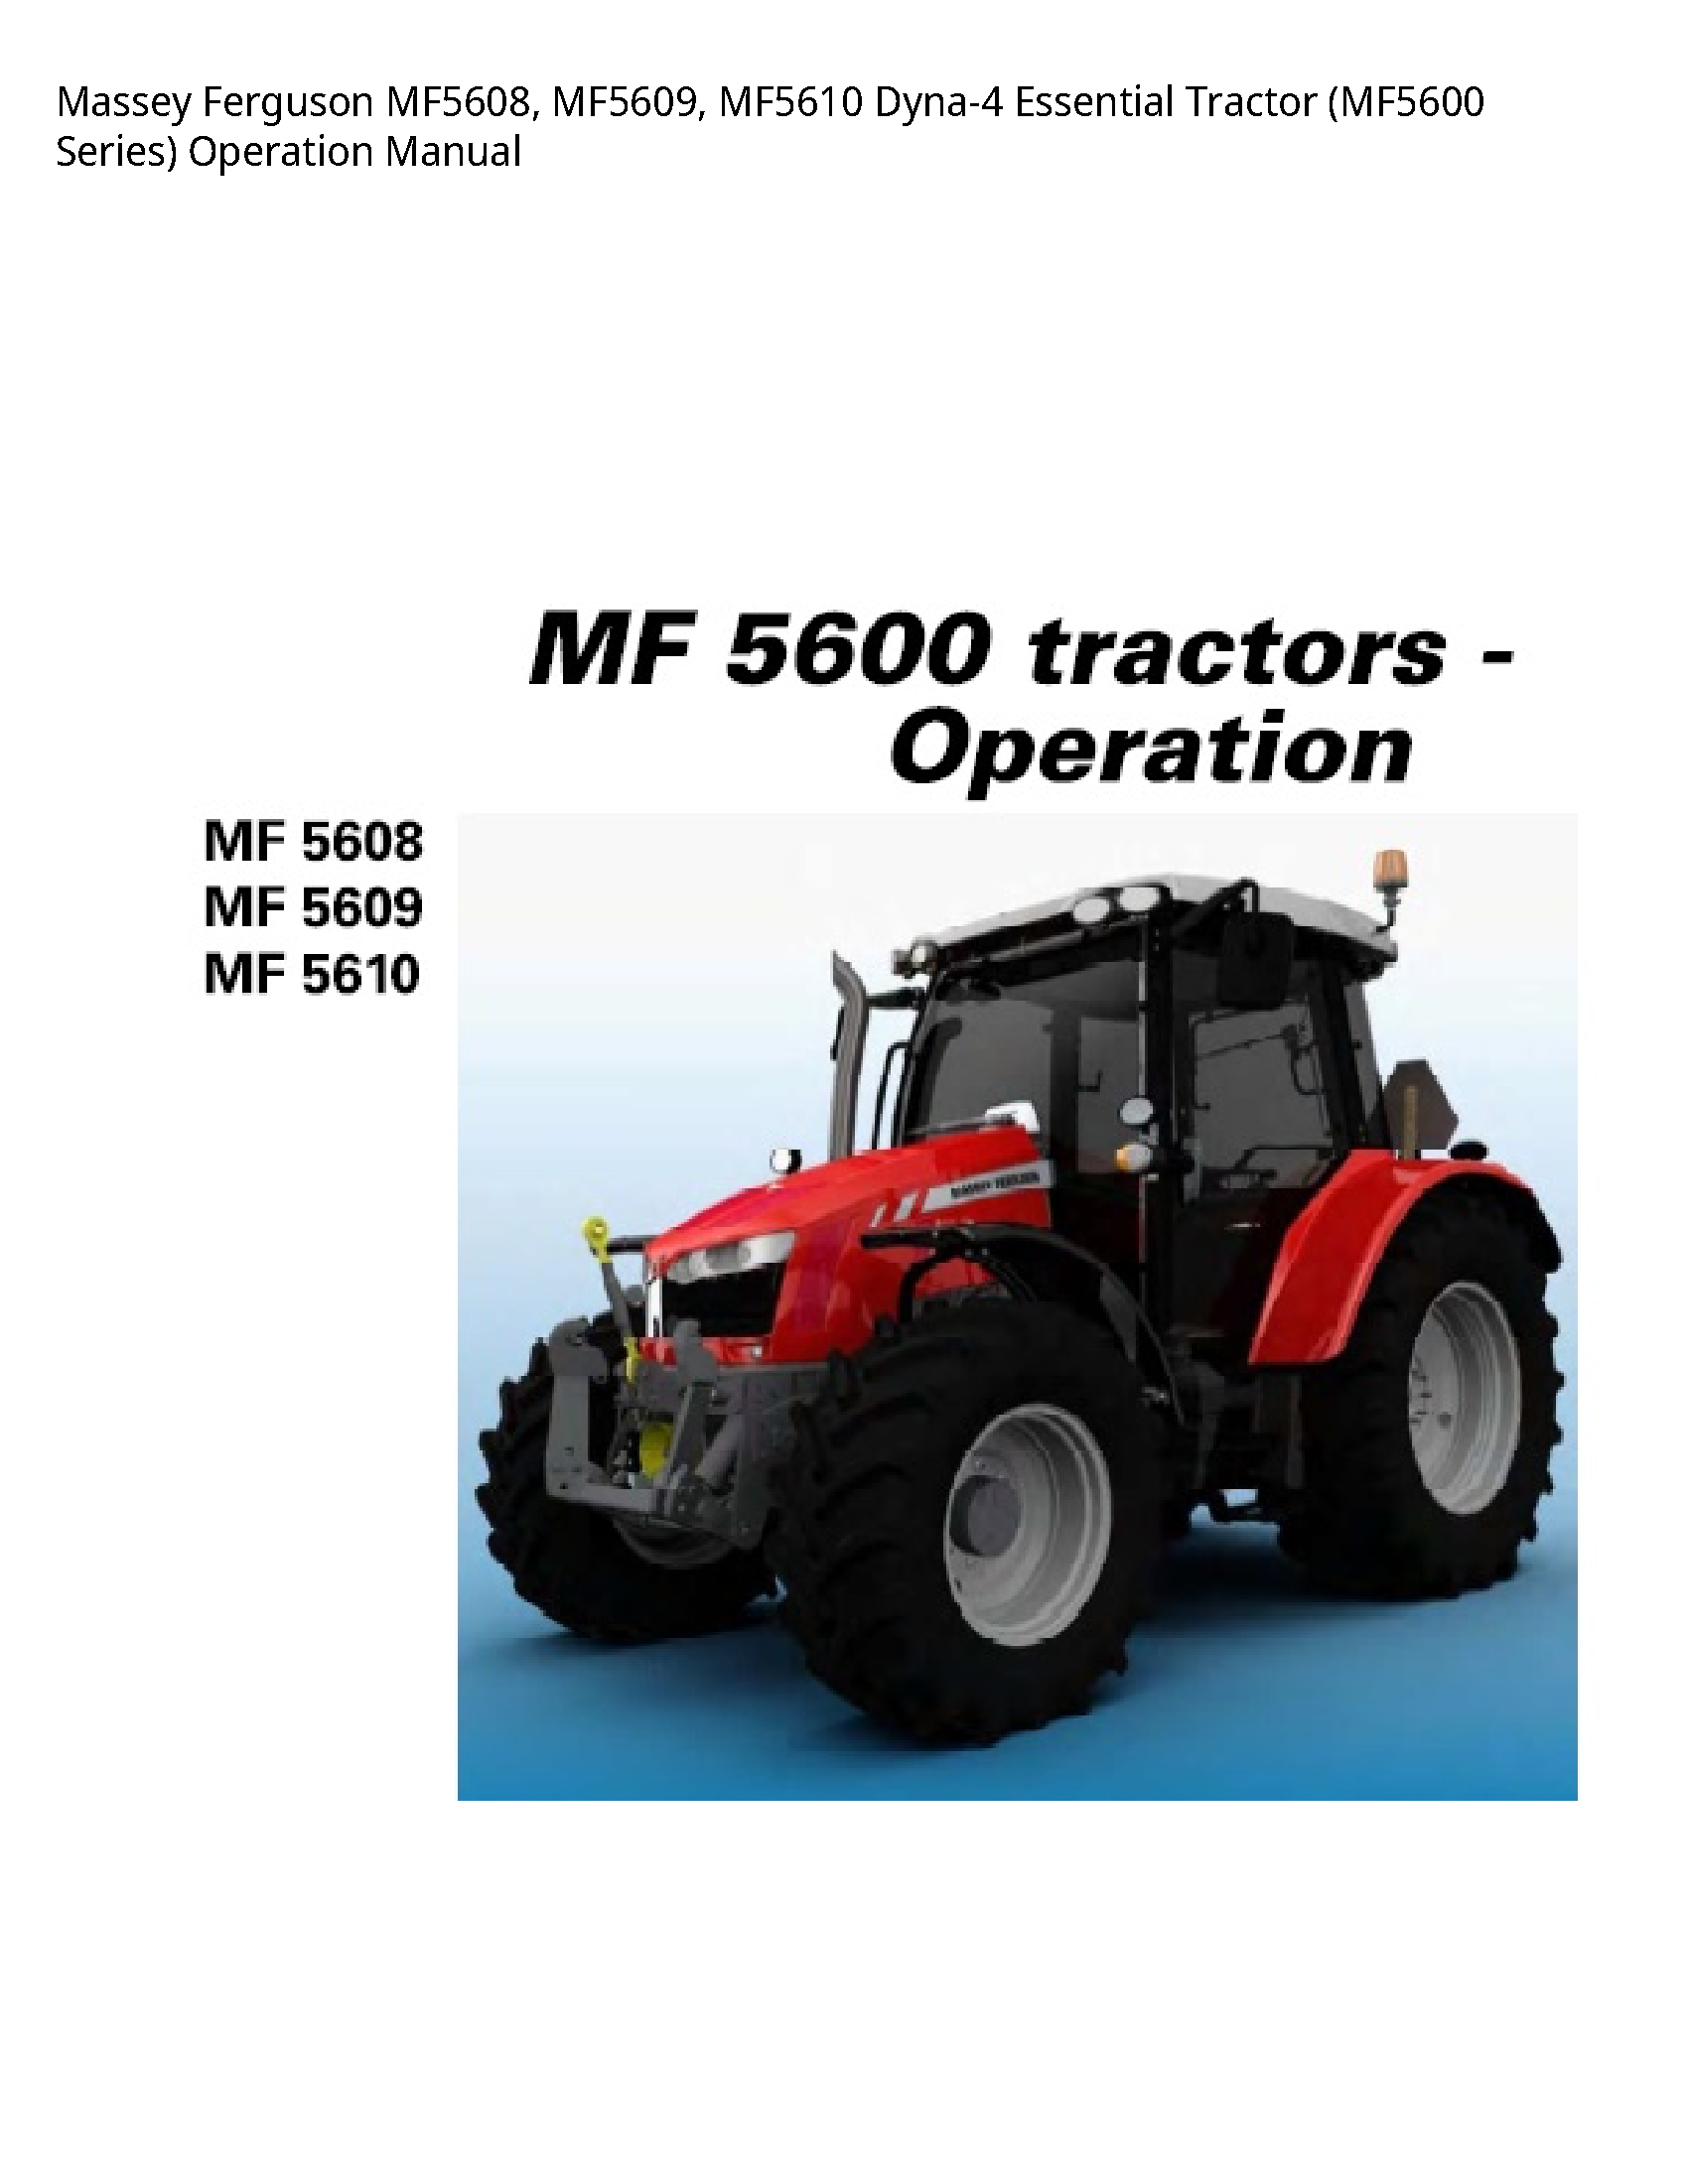 Massey Ferguson MF5608 Essential Tractor Series) Operation manual